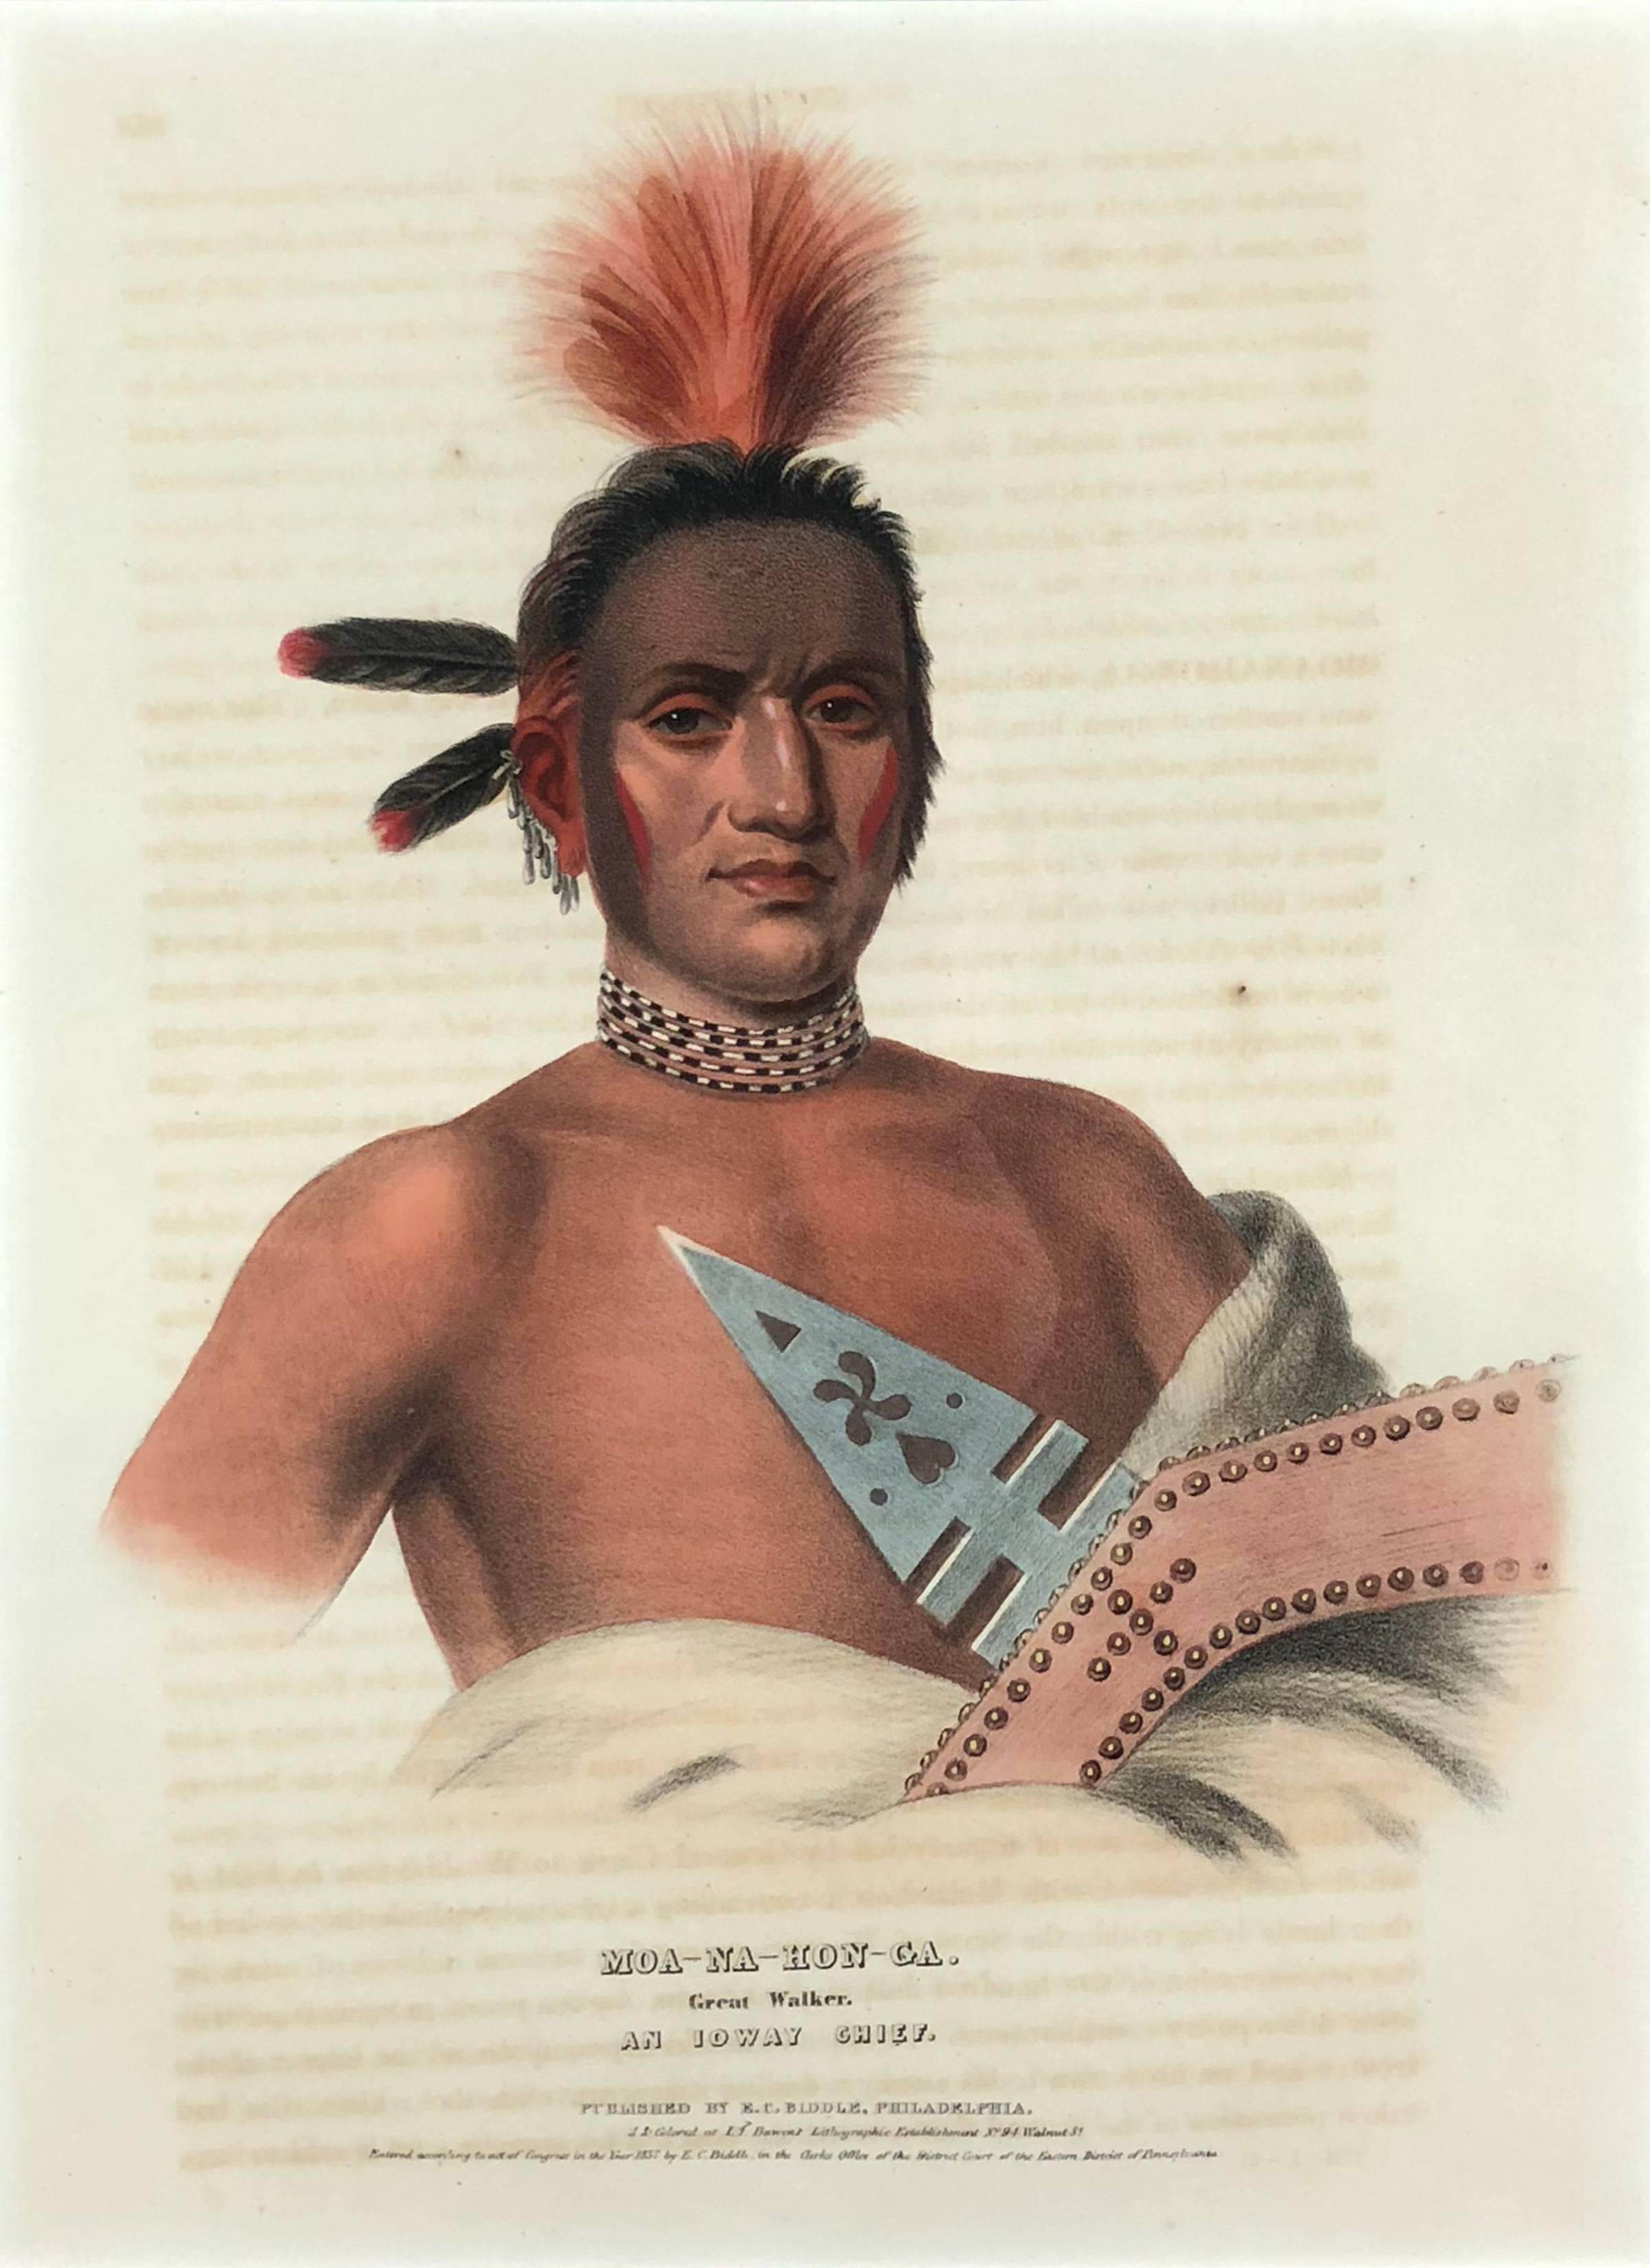 McKenney & Hall Portrait Print - Moa-Na-Hon-Ga, Great Walker, An Ioway Chief